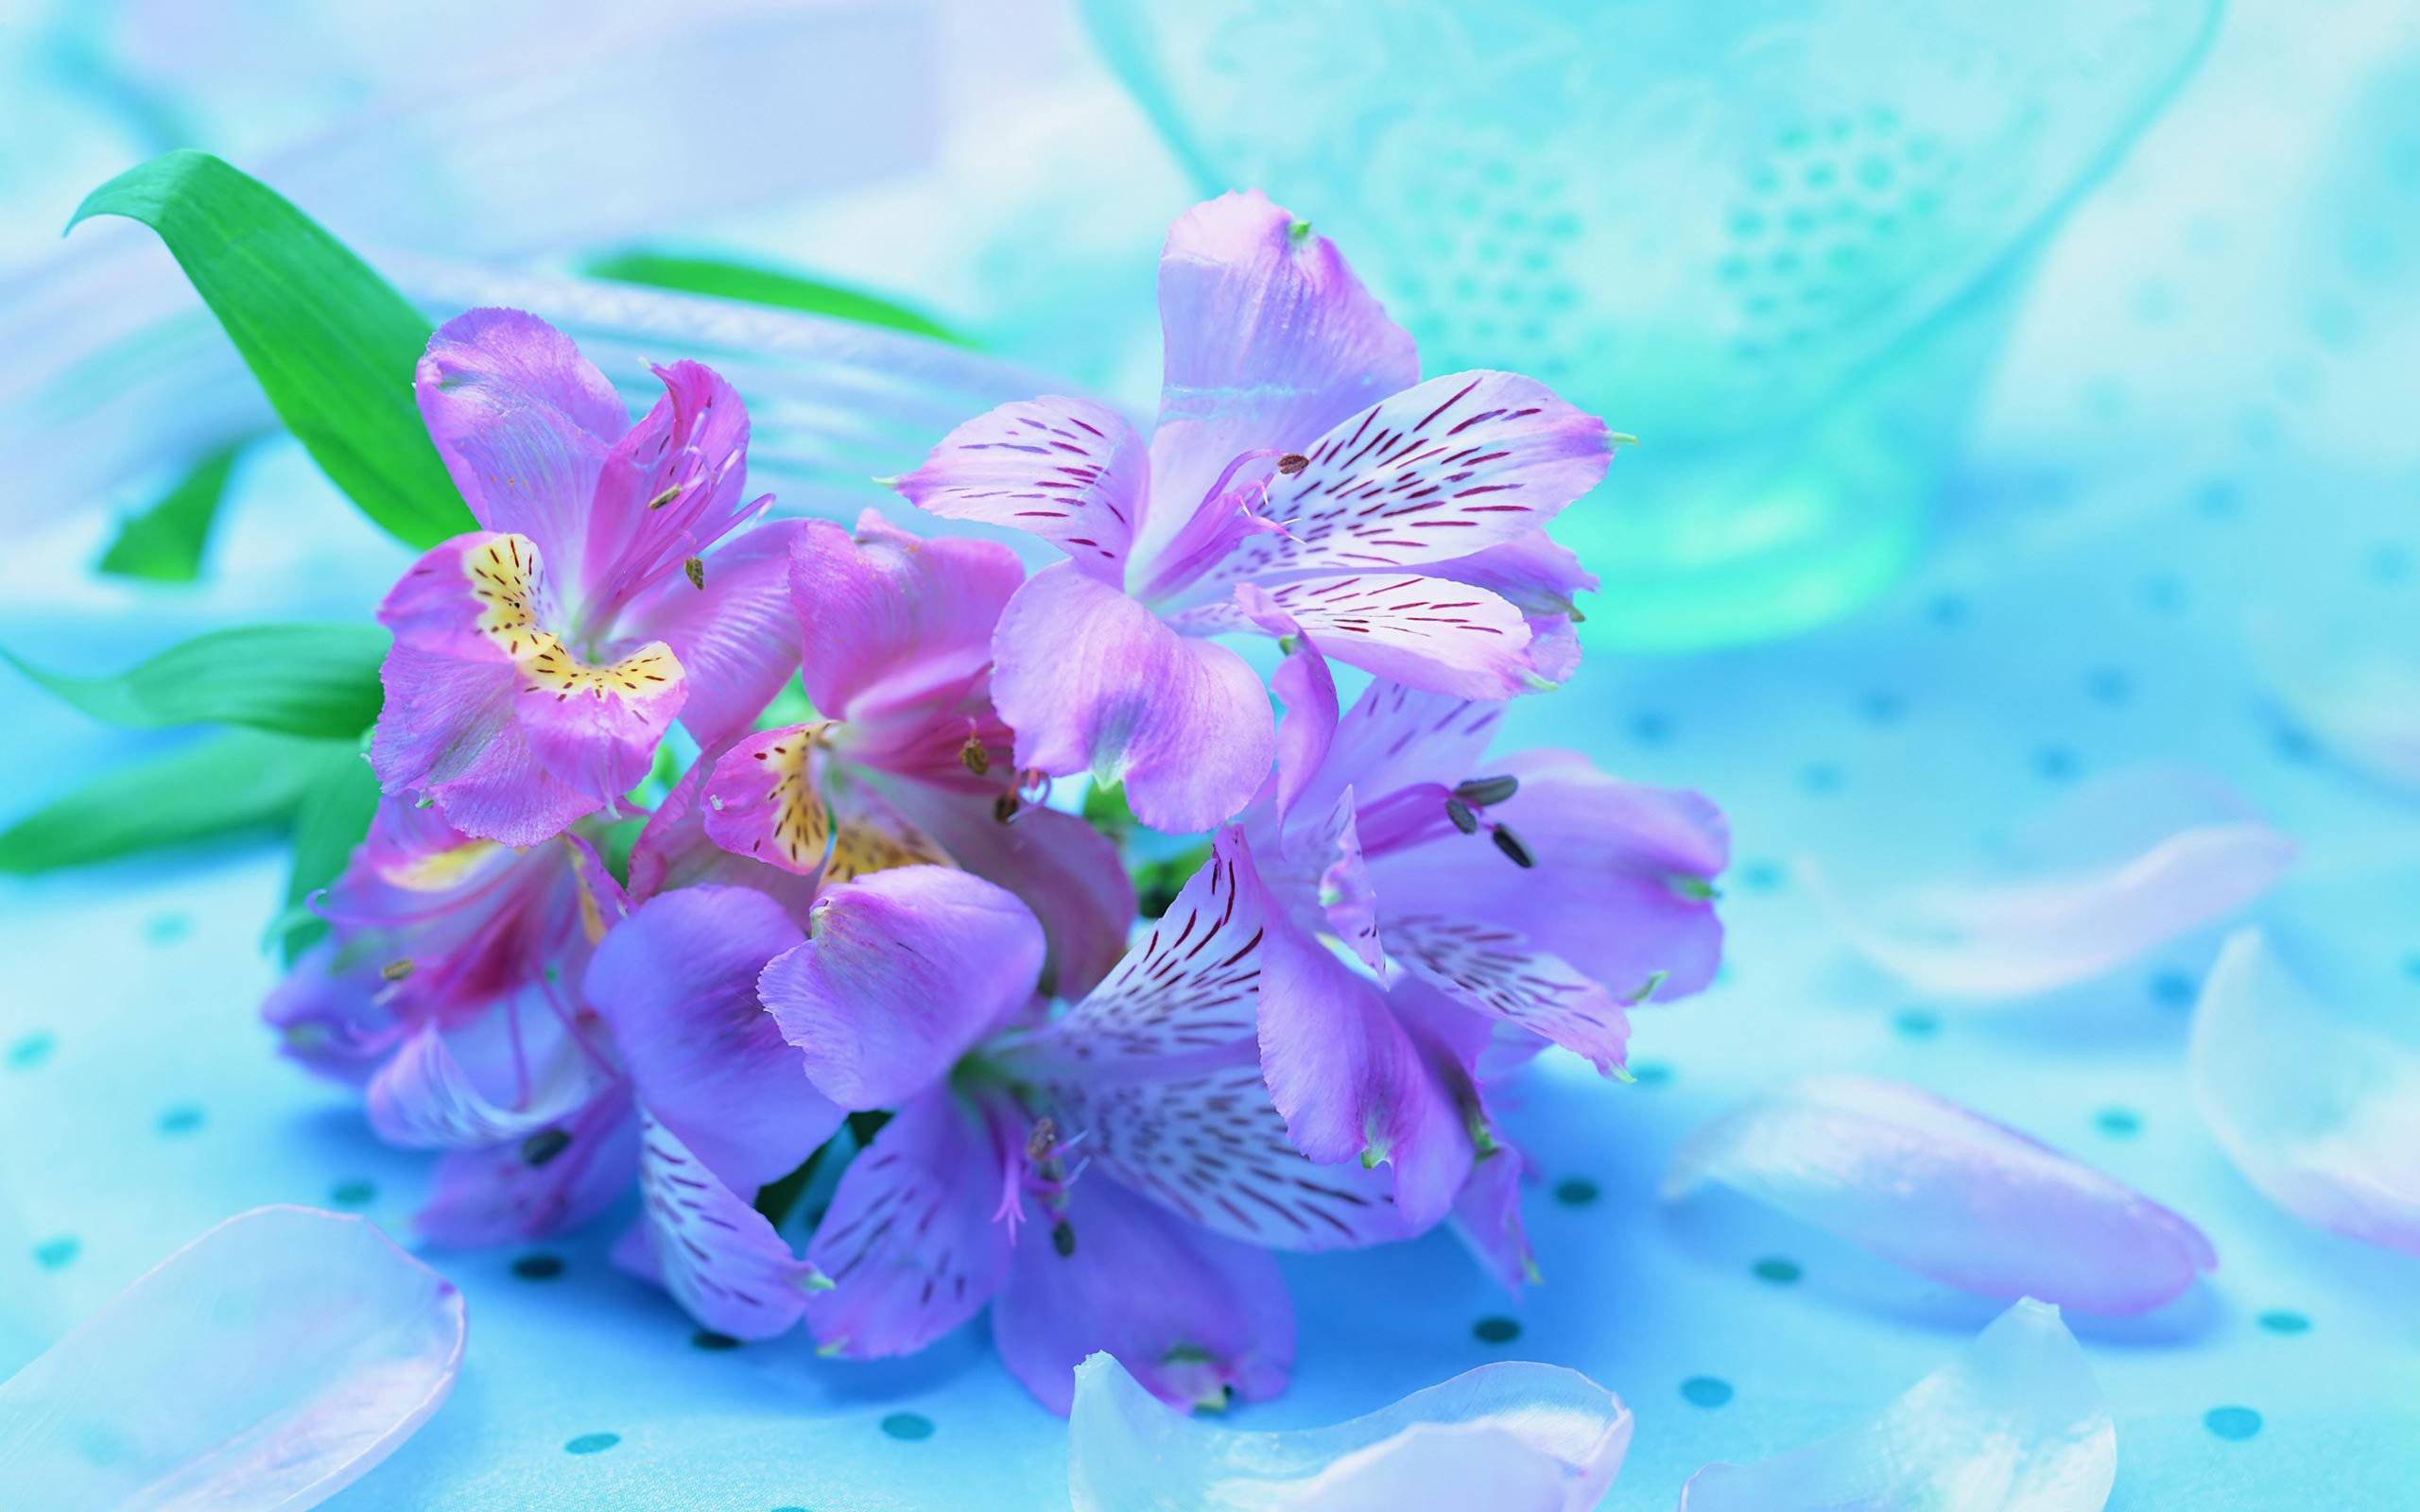 285745 descargar imagen tierra/naturaleza, iris, flor, flores: fondos de pantalla y protectores de pantalla gratis